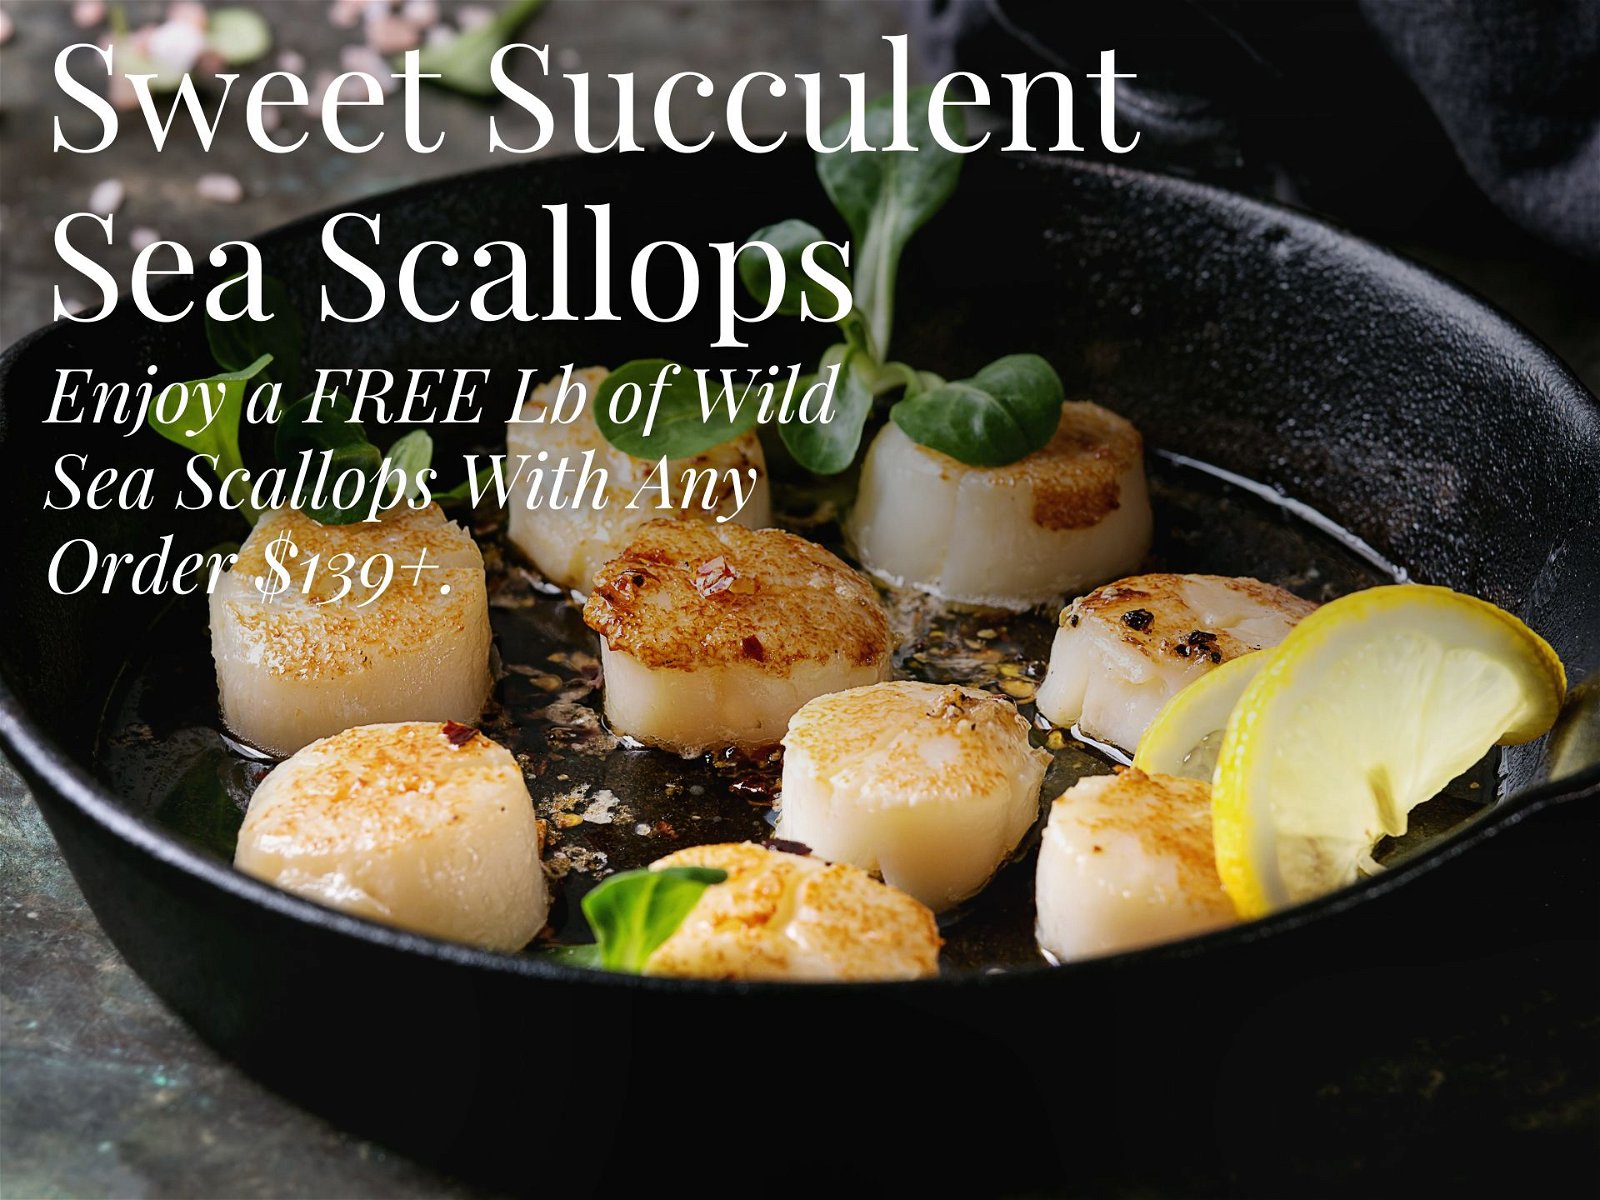 Free LB Wild Sea Scallops